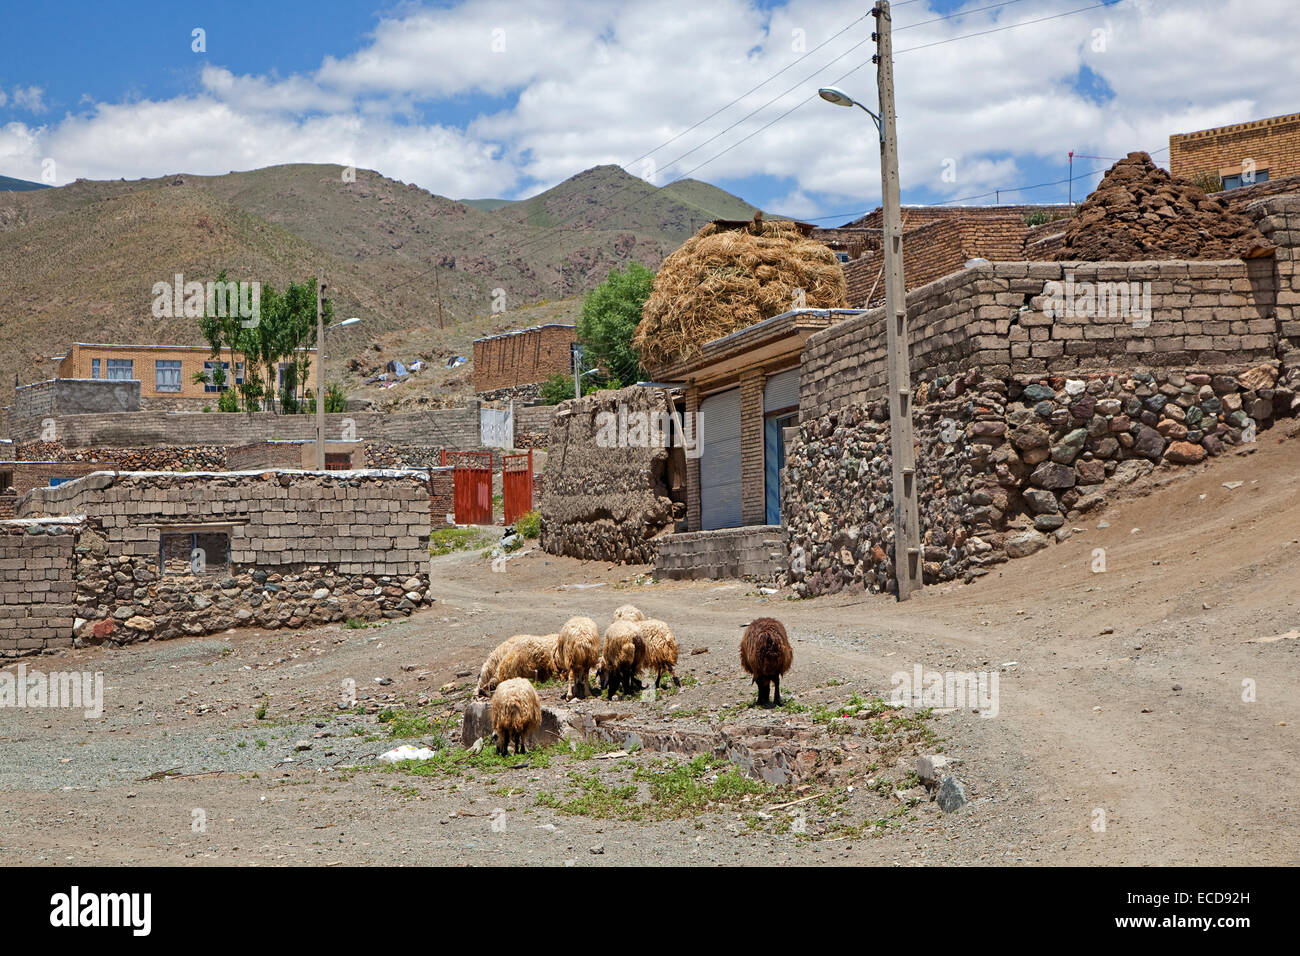 Flock of sheep in street of the dusty, small border town Qotur, West Azerbaijan, Iran Stock Photo